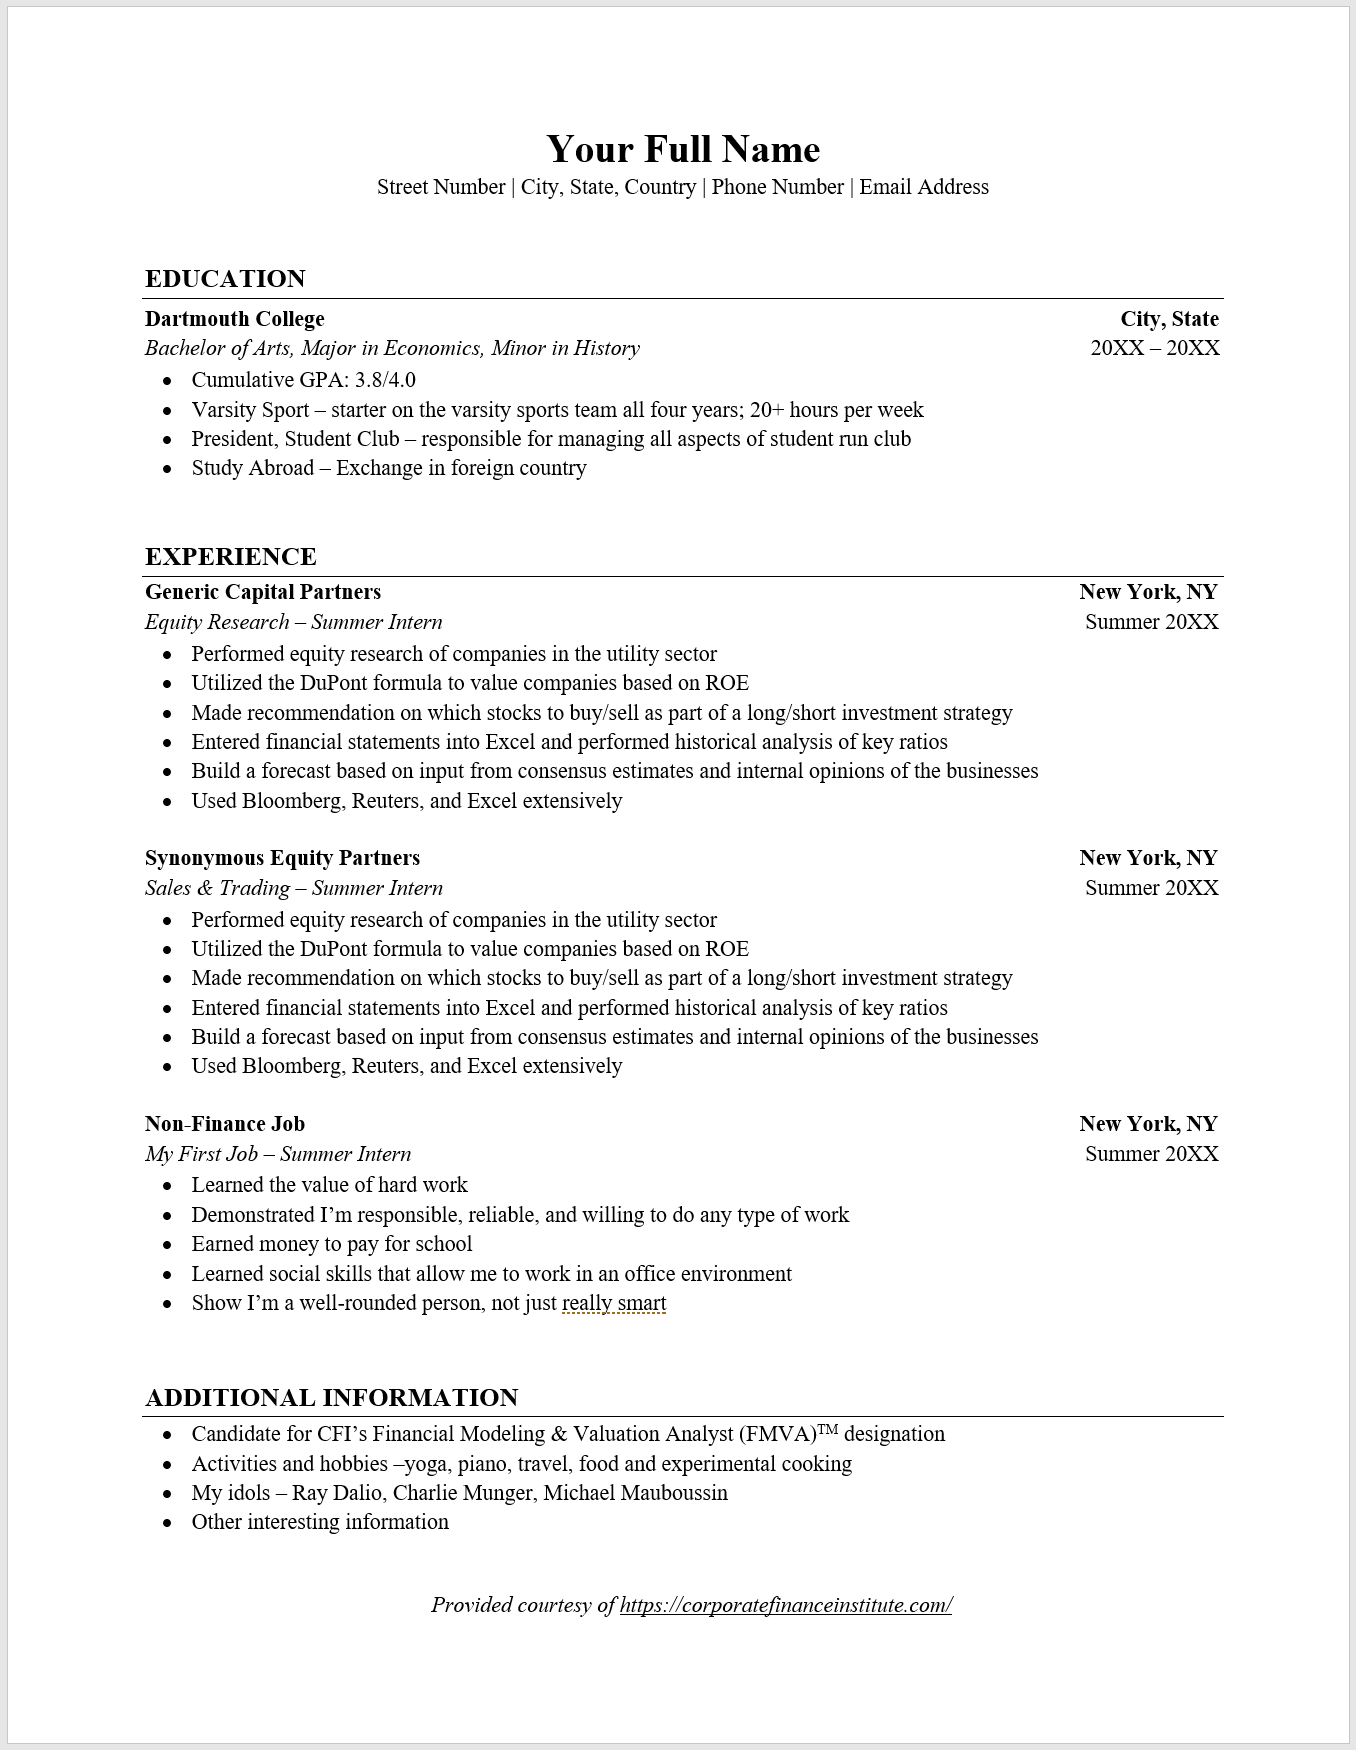 How to List Minor on Resume